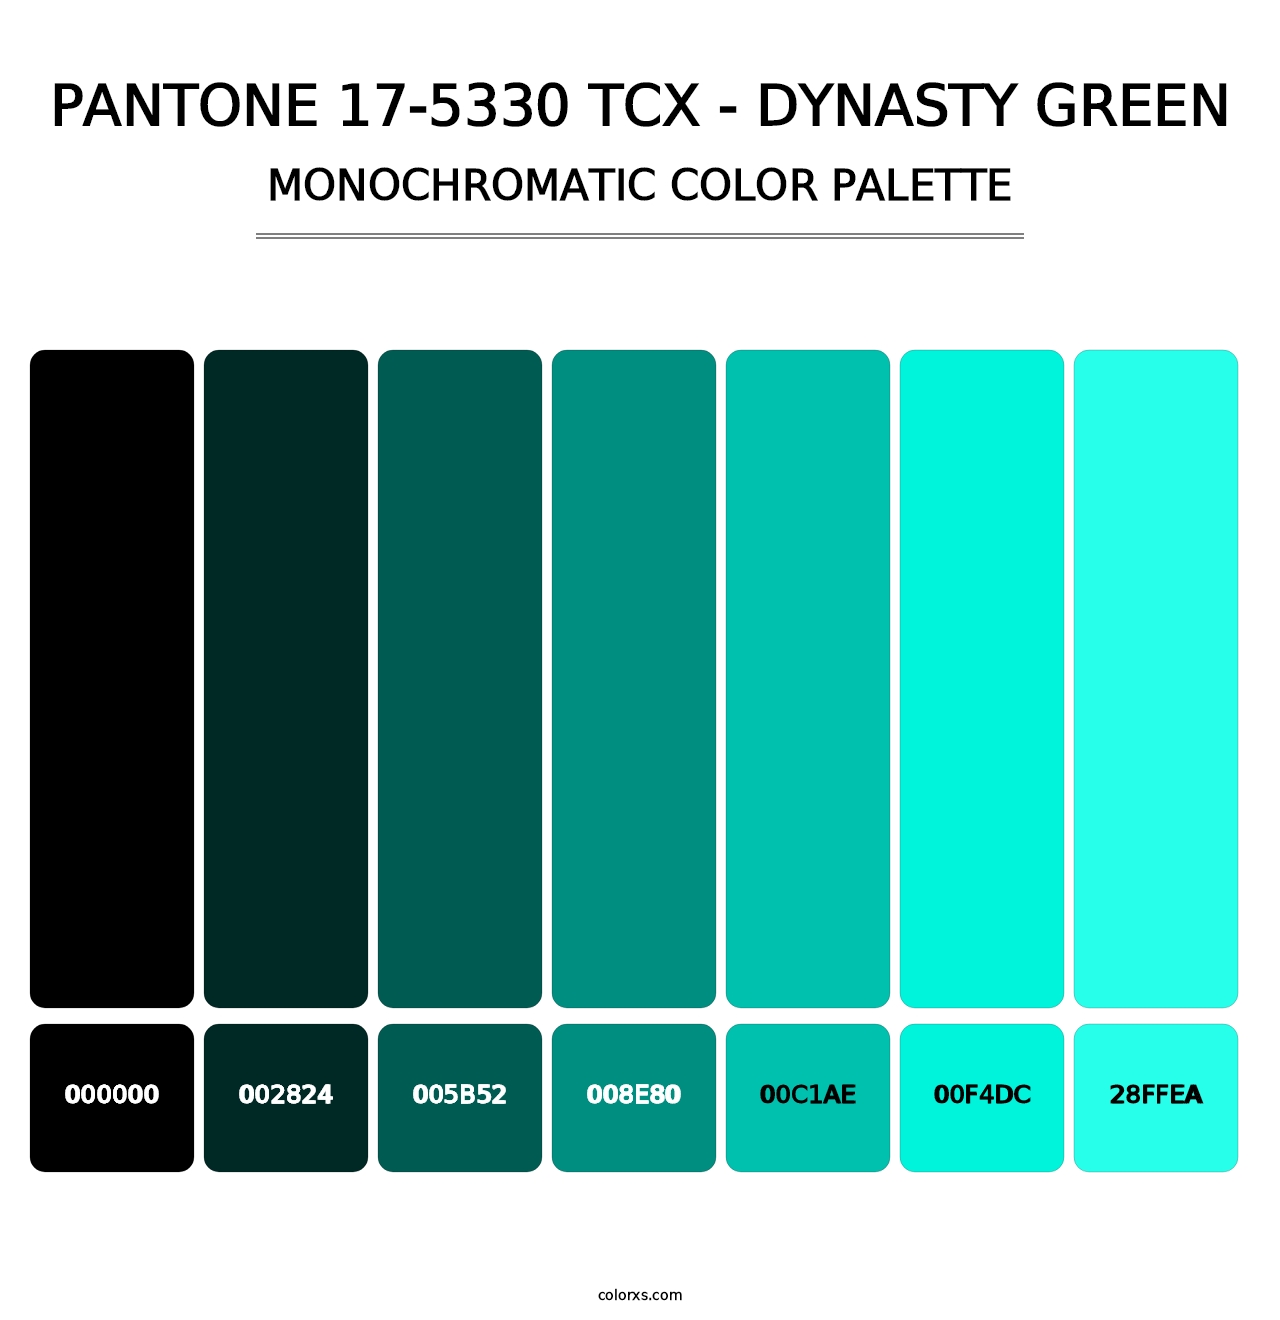 PANTONE 17-5330 TCX - Dynasty Green - Monochromatic Color Palette